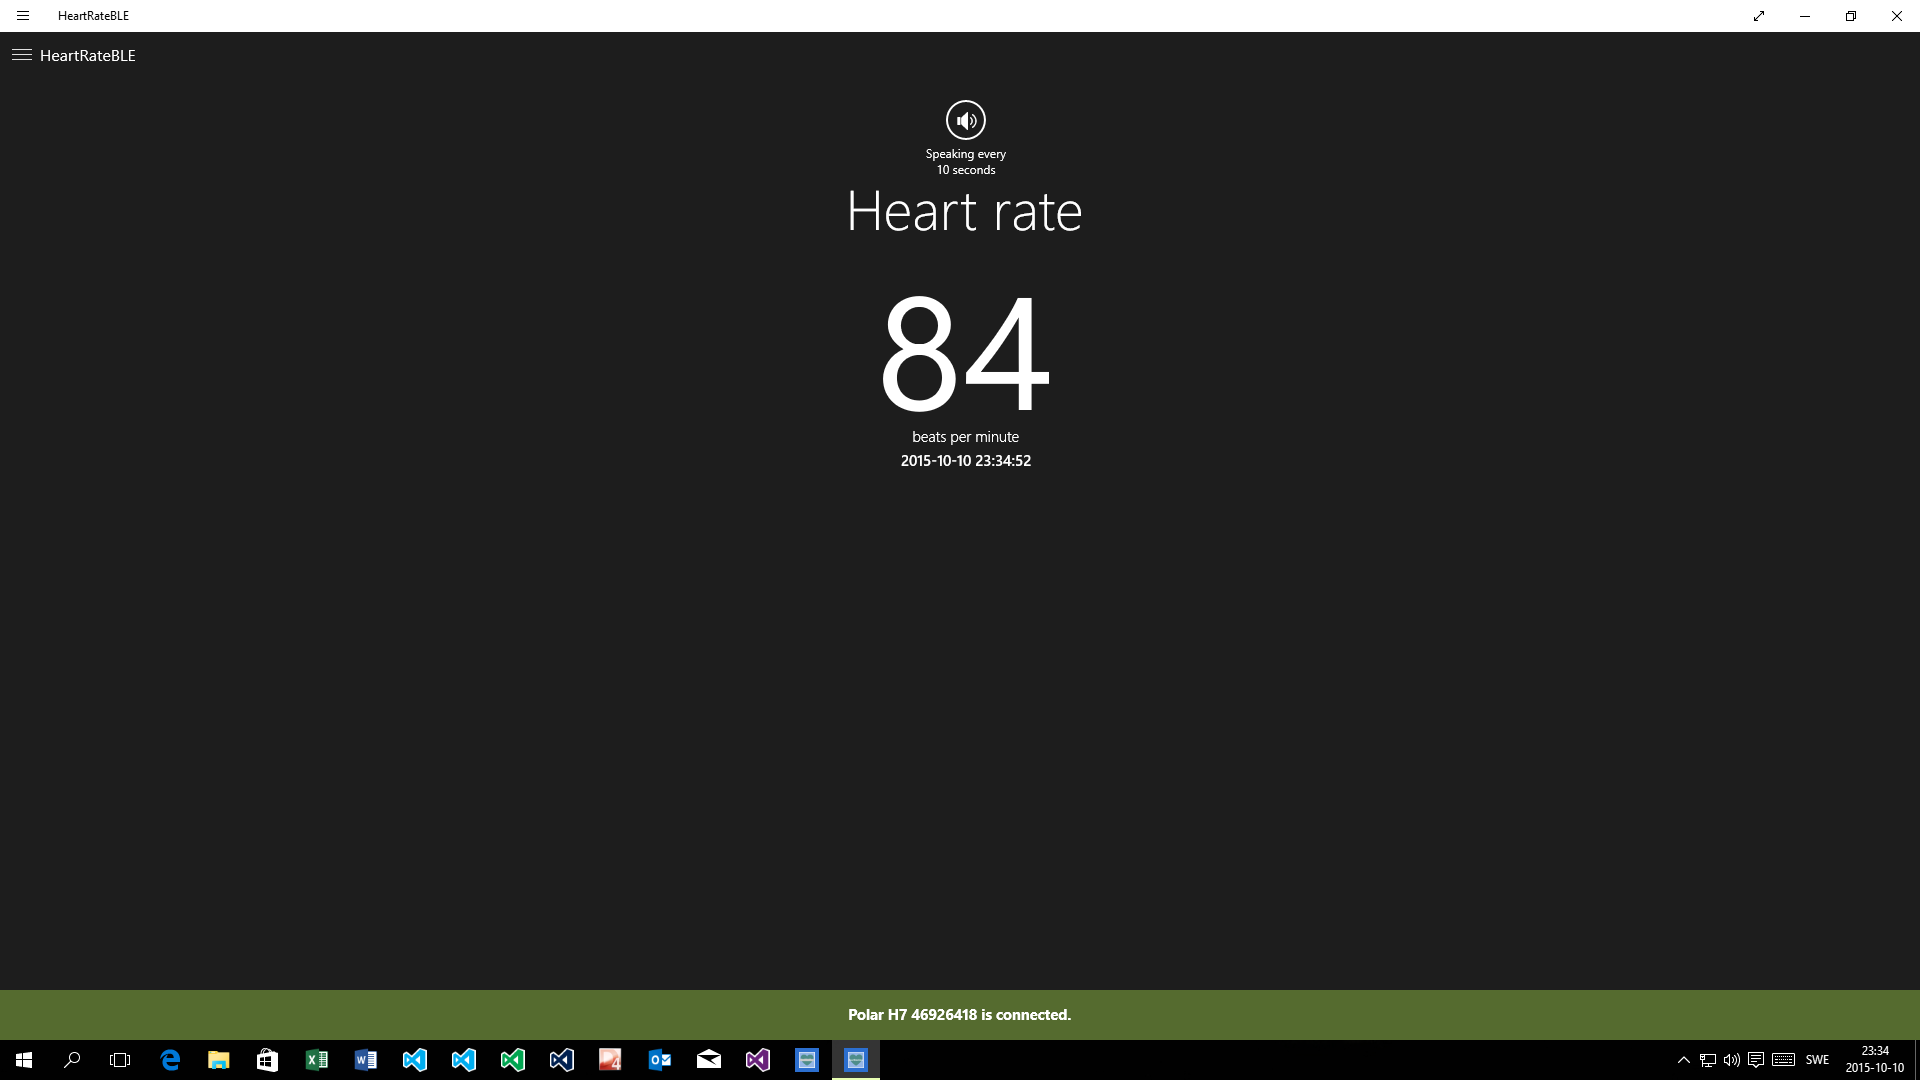 Show heart rate as beats per minute (bpm).